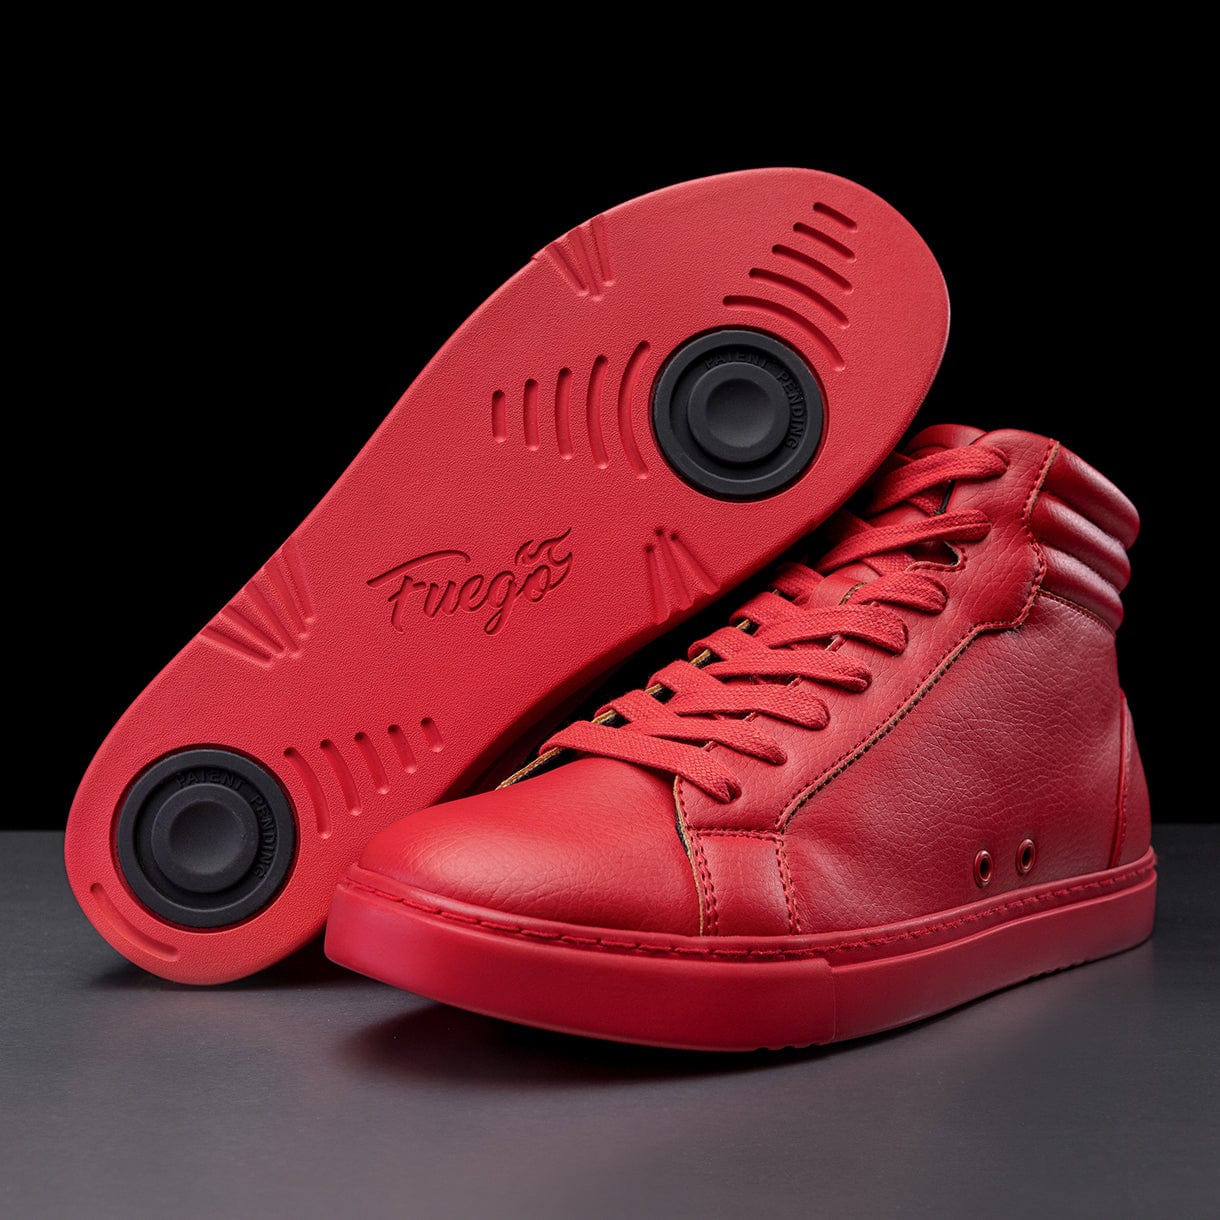 Red Canvas Hi Top Shan Zu Shanzu Sport Athletic Sneakers 12 M 10 W EUC